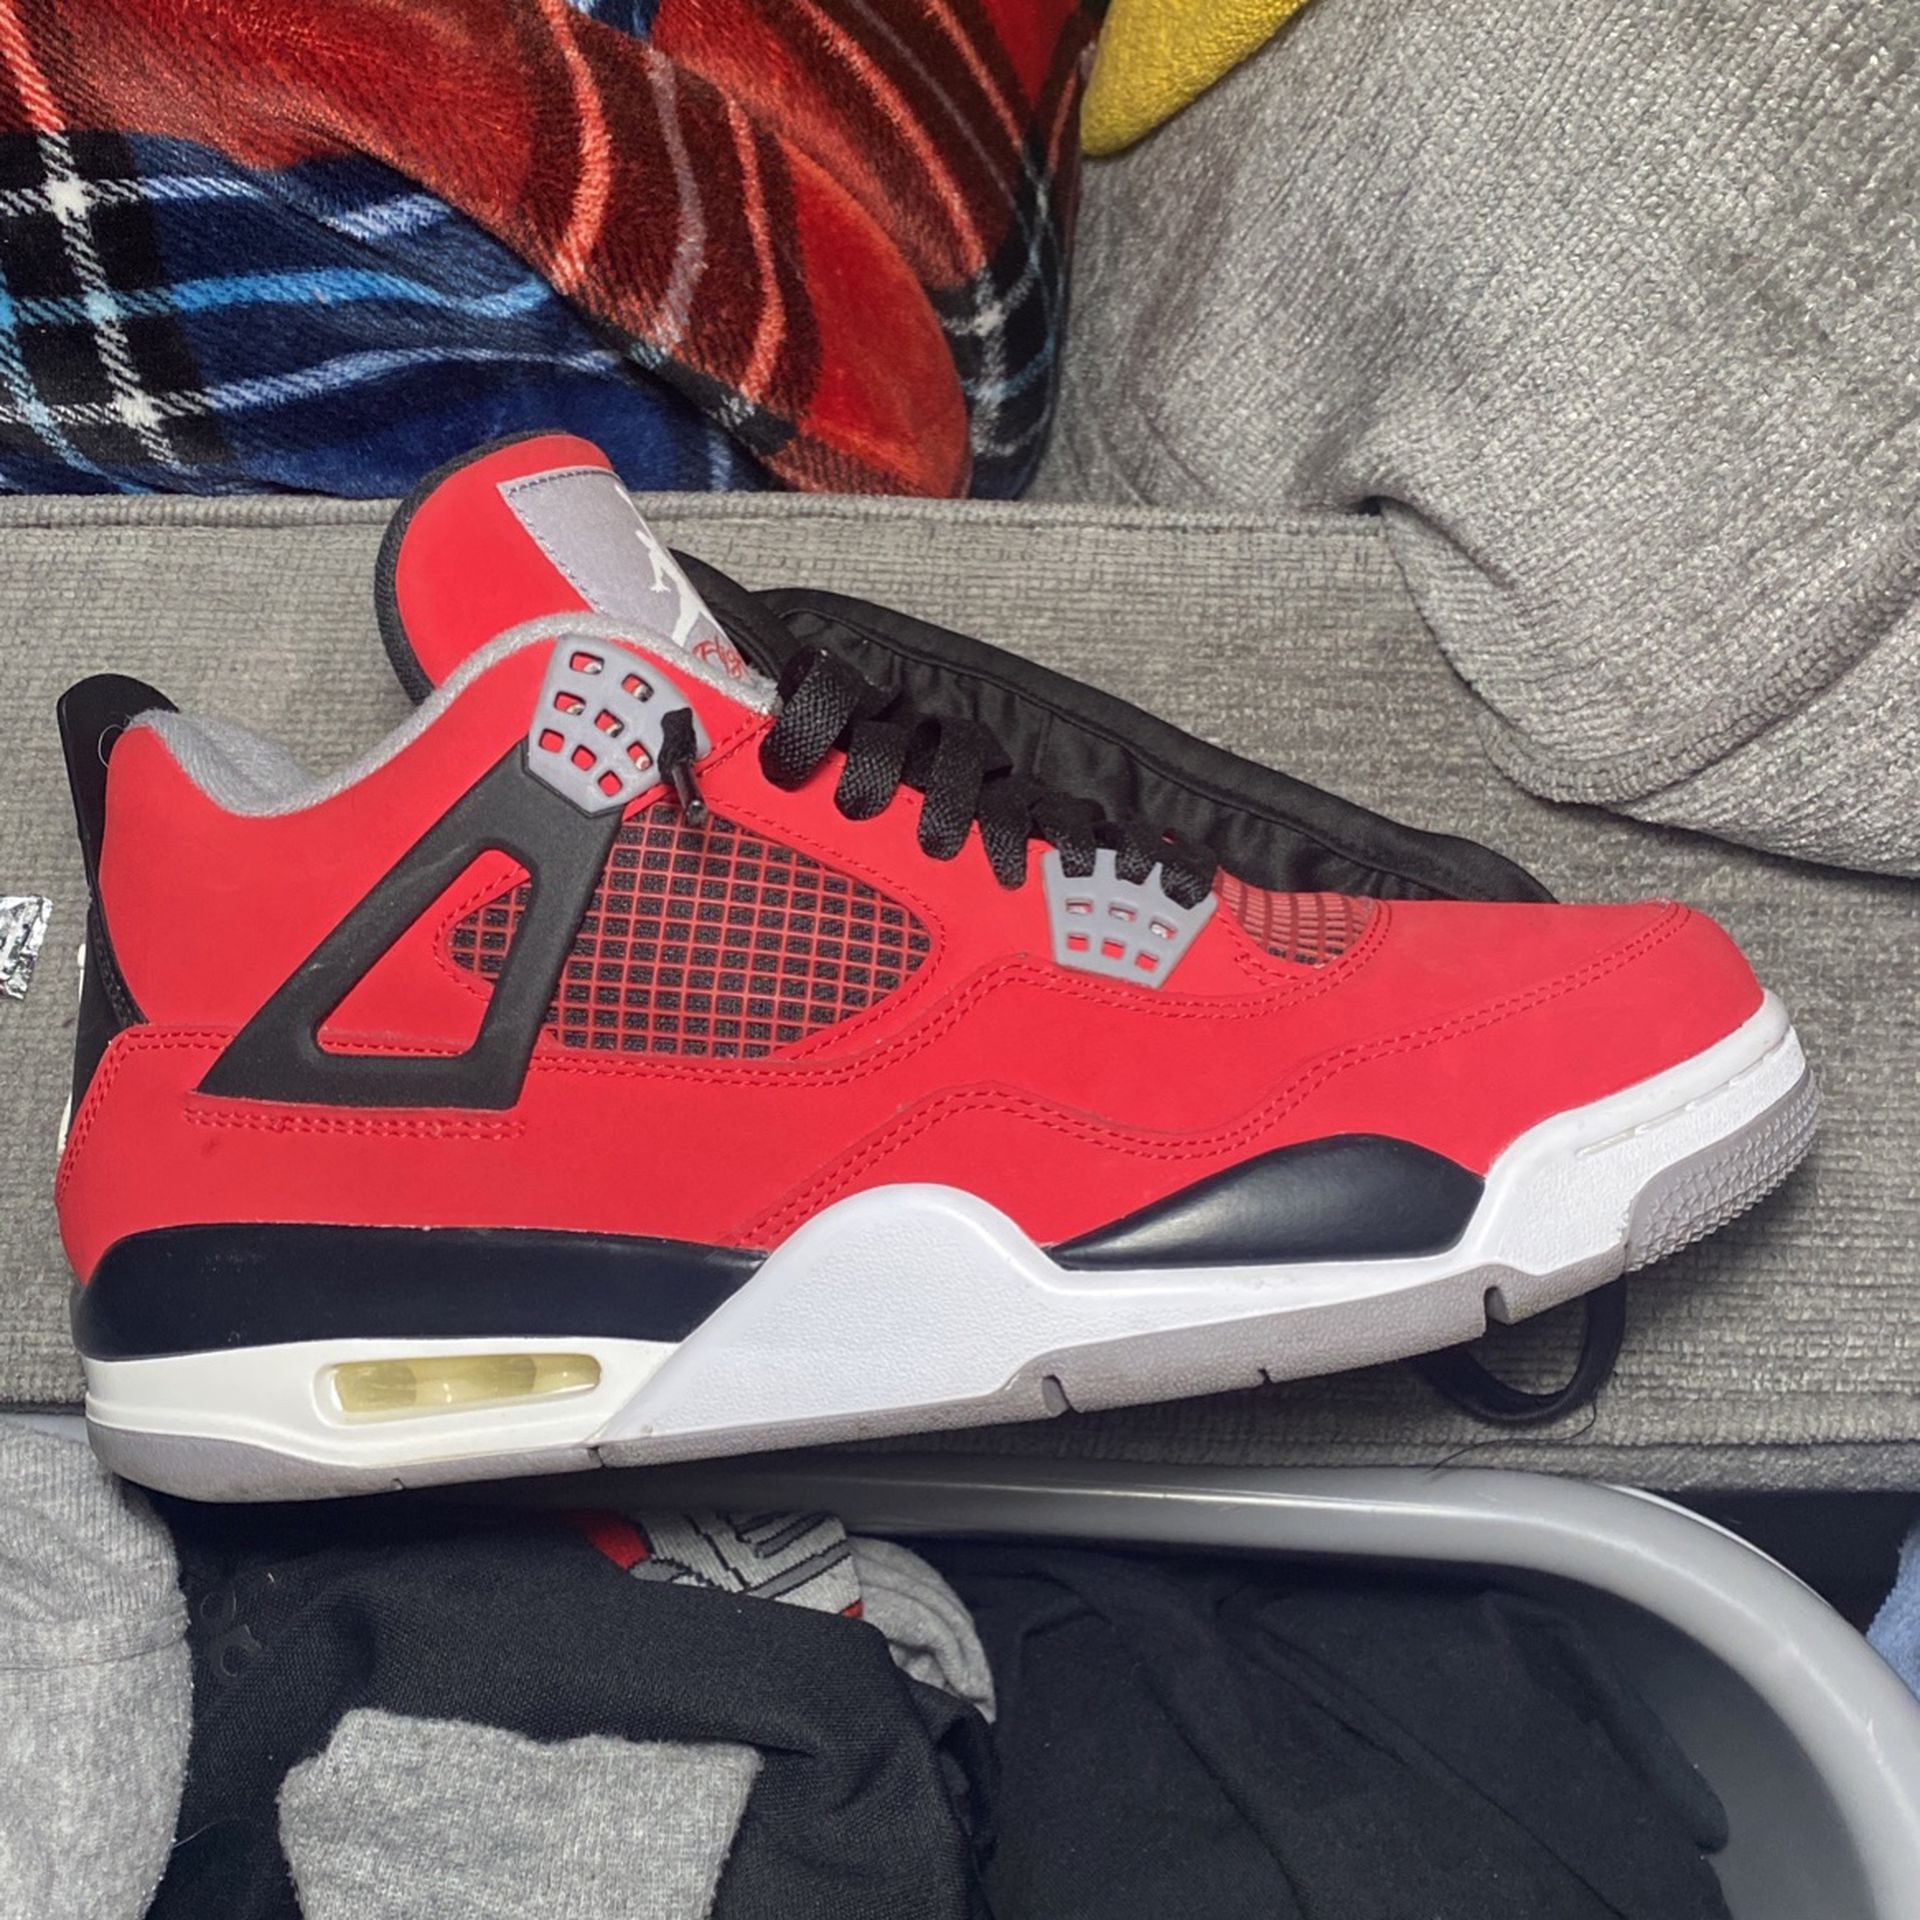 Jordans Red Black Grey And White